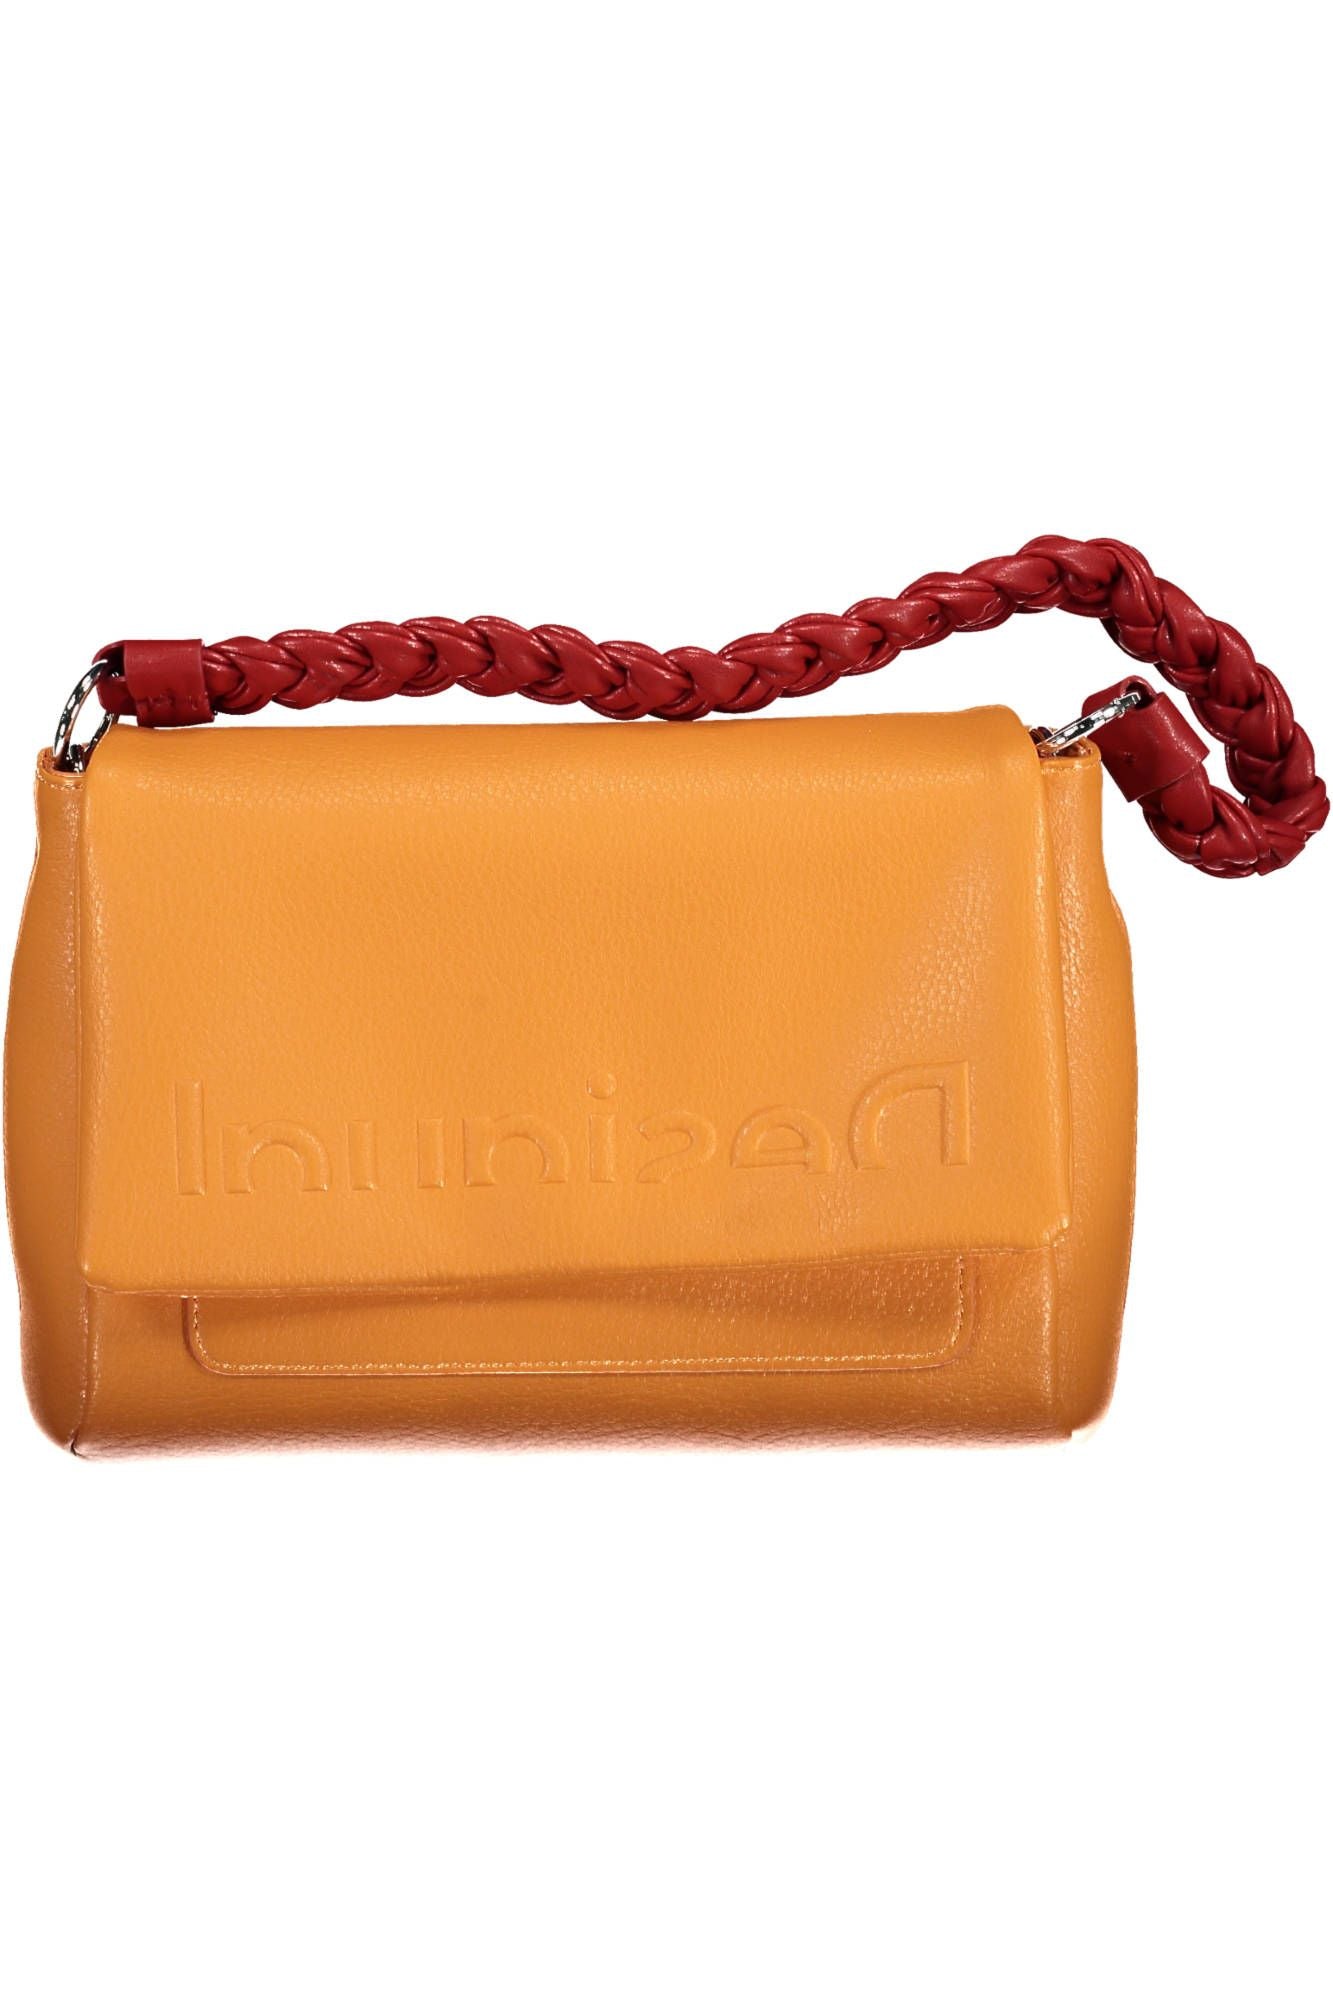 Desigual Orange Polyurethane Handbag - Walbiz.com